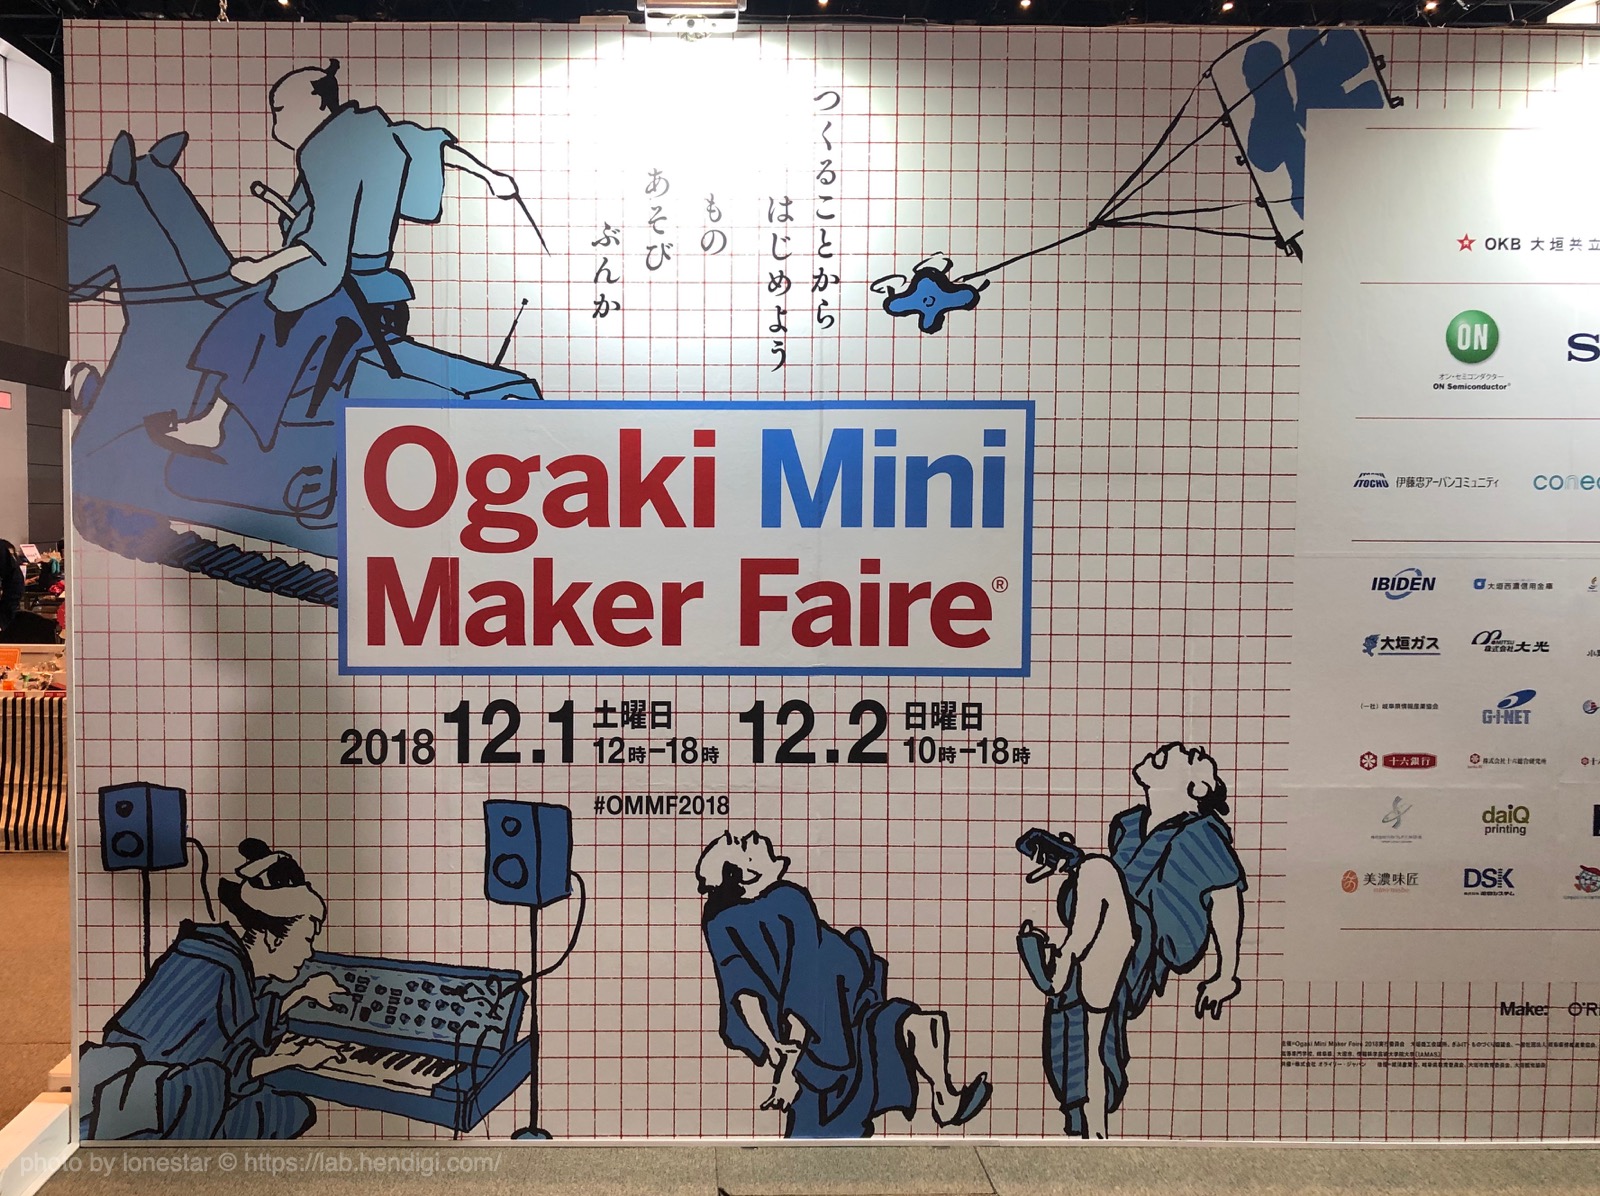 Ogaki Mini Maker Faire 2018